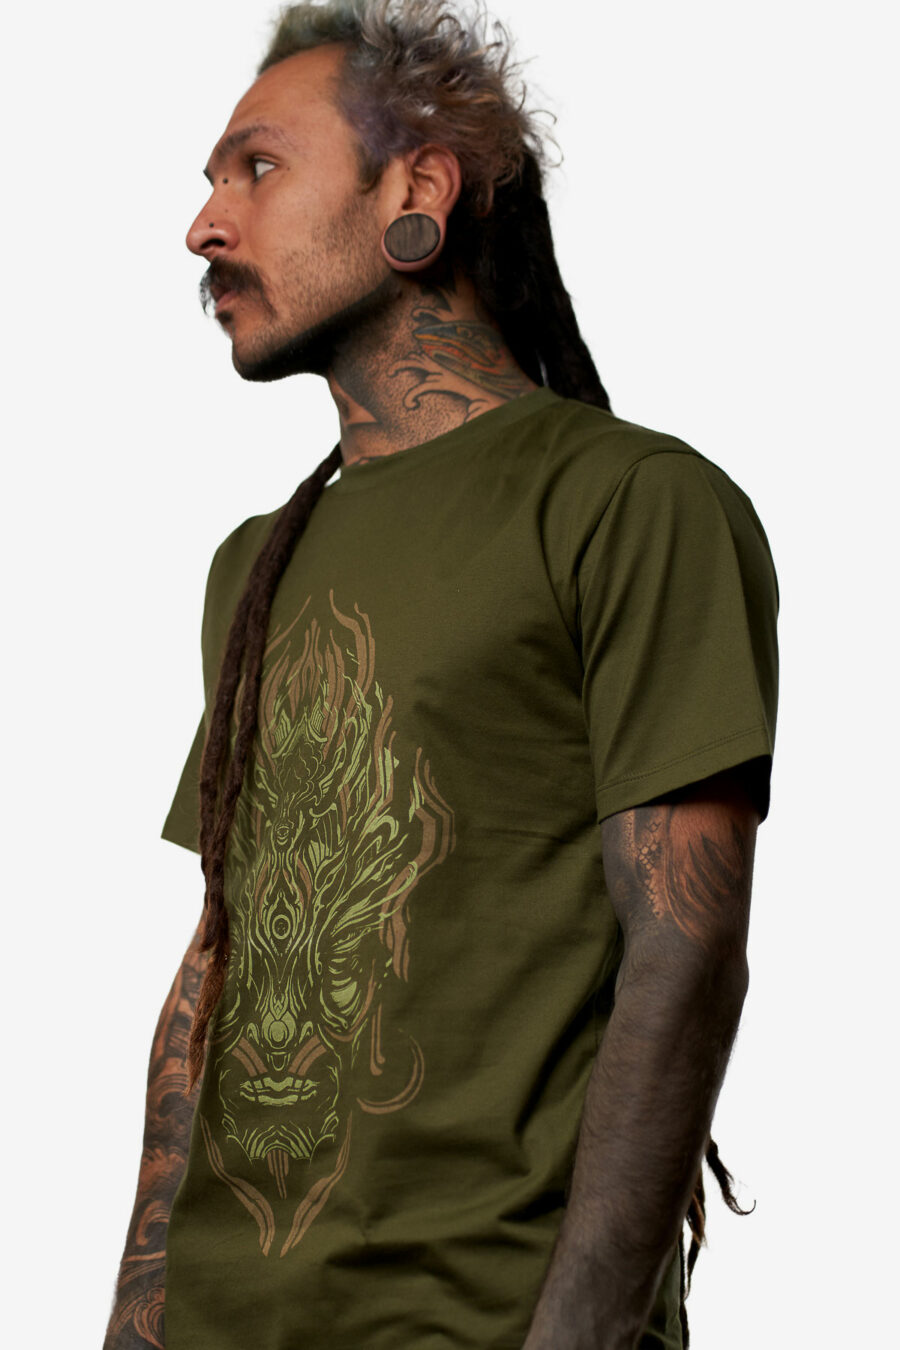 inter-dim-being-green-t-shirt-for-men-alternative-fashion-and-festival-wear-avanyah-clothing